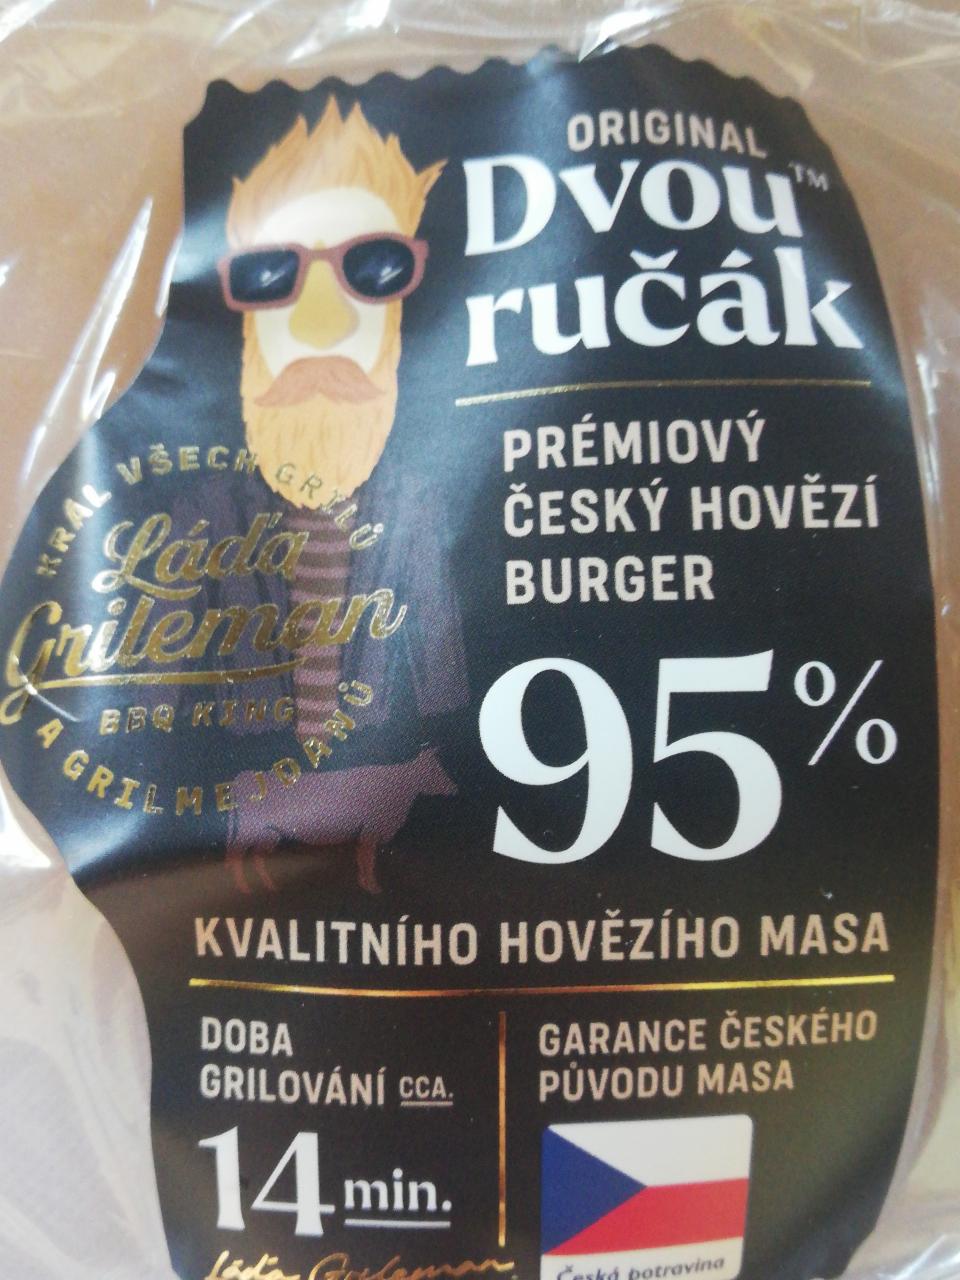 Fotografie - Original Dvouručák Hovězí Burger Láďa Grileman